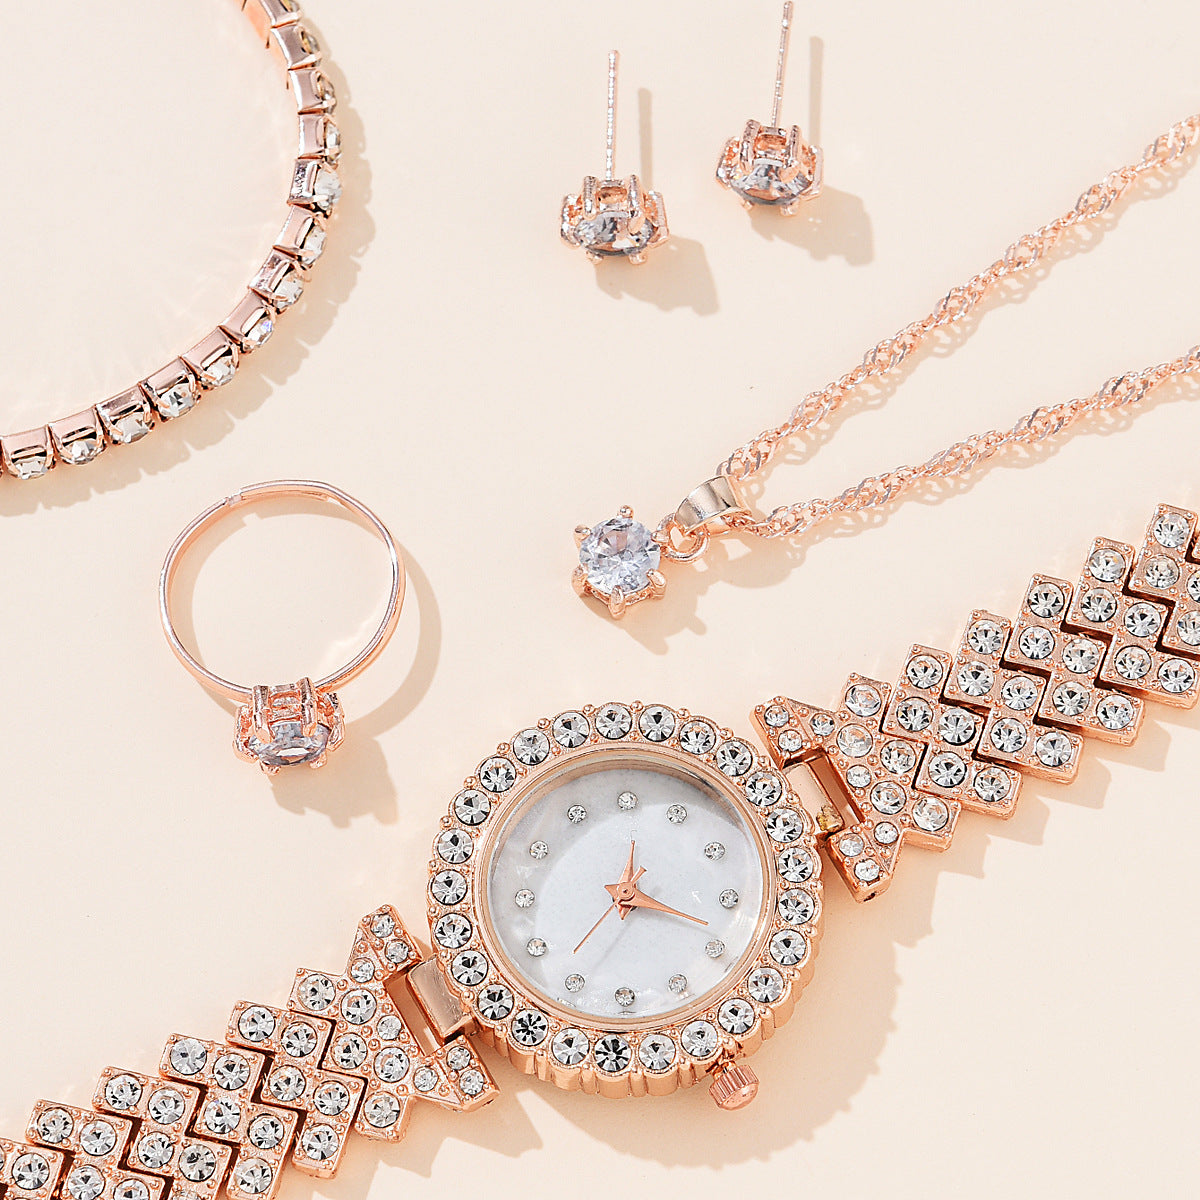 Set of women's alloy quartz watch, necklace, earrings, bracelet and ring